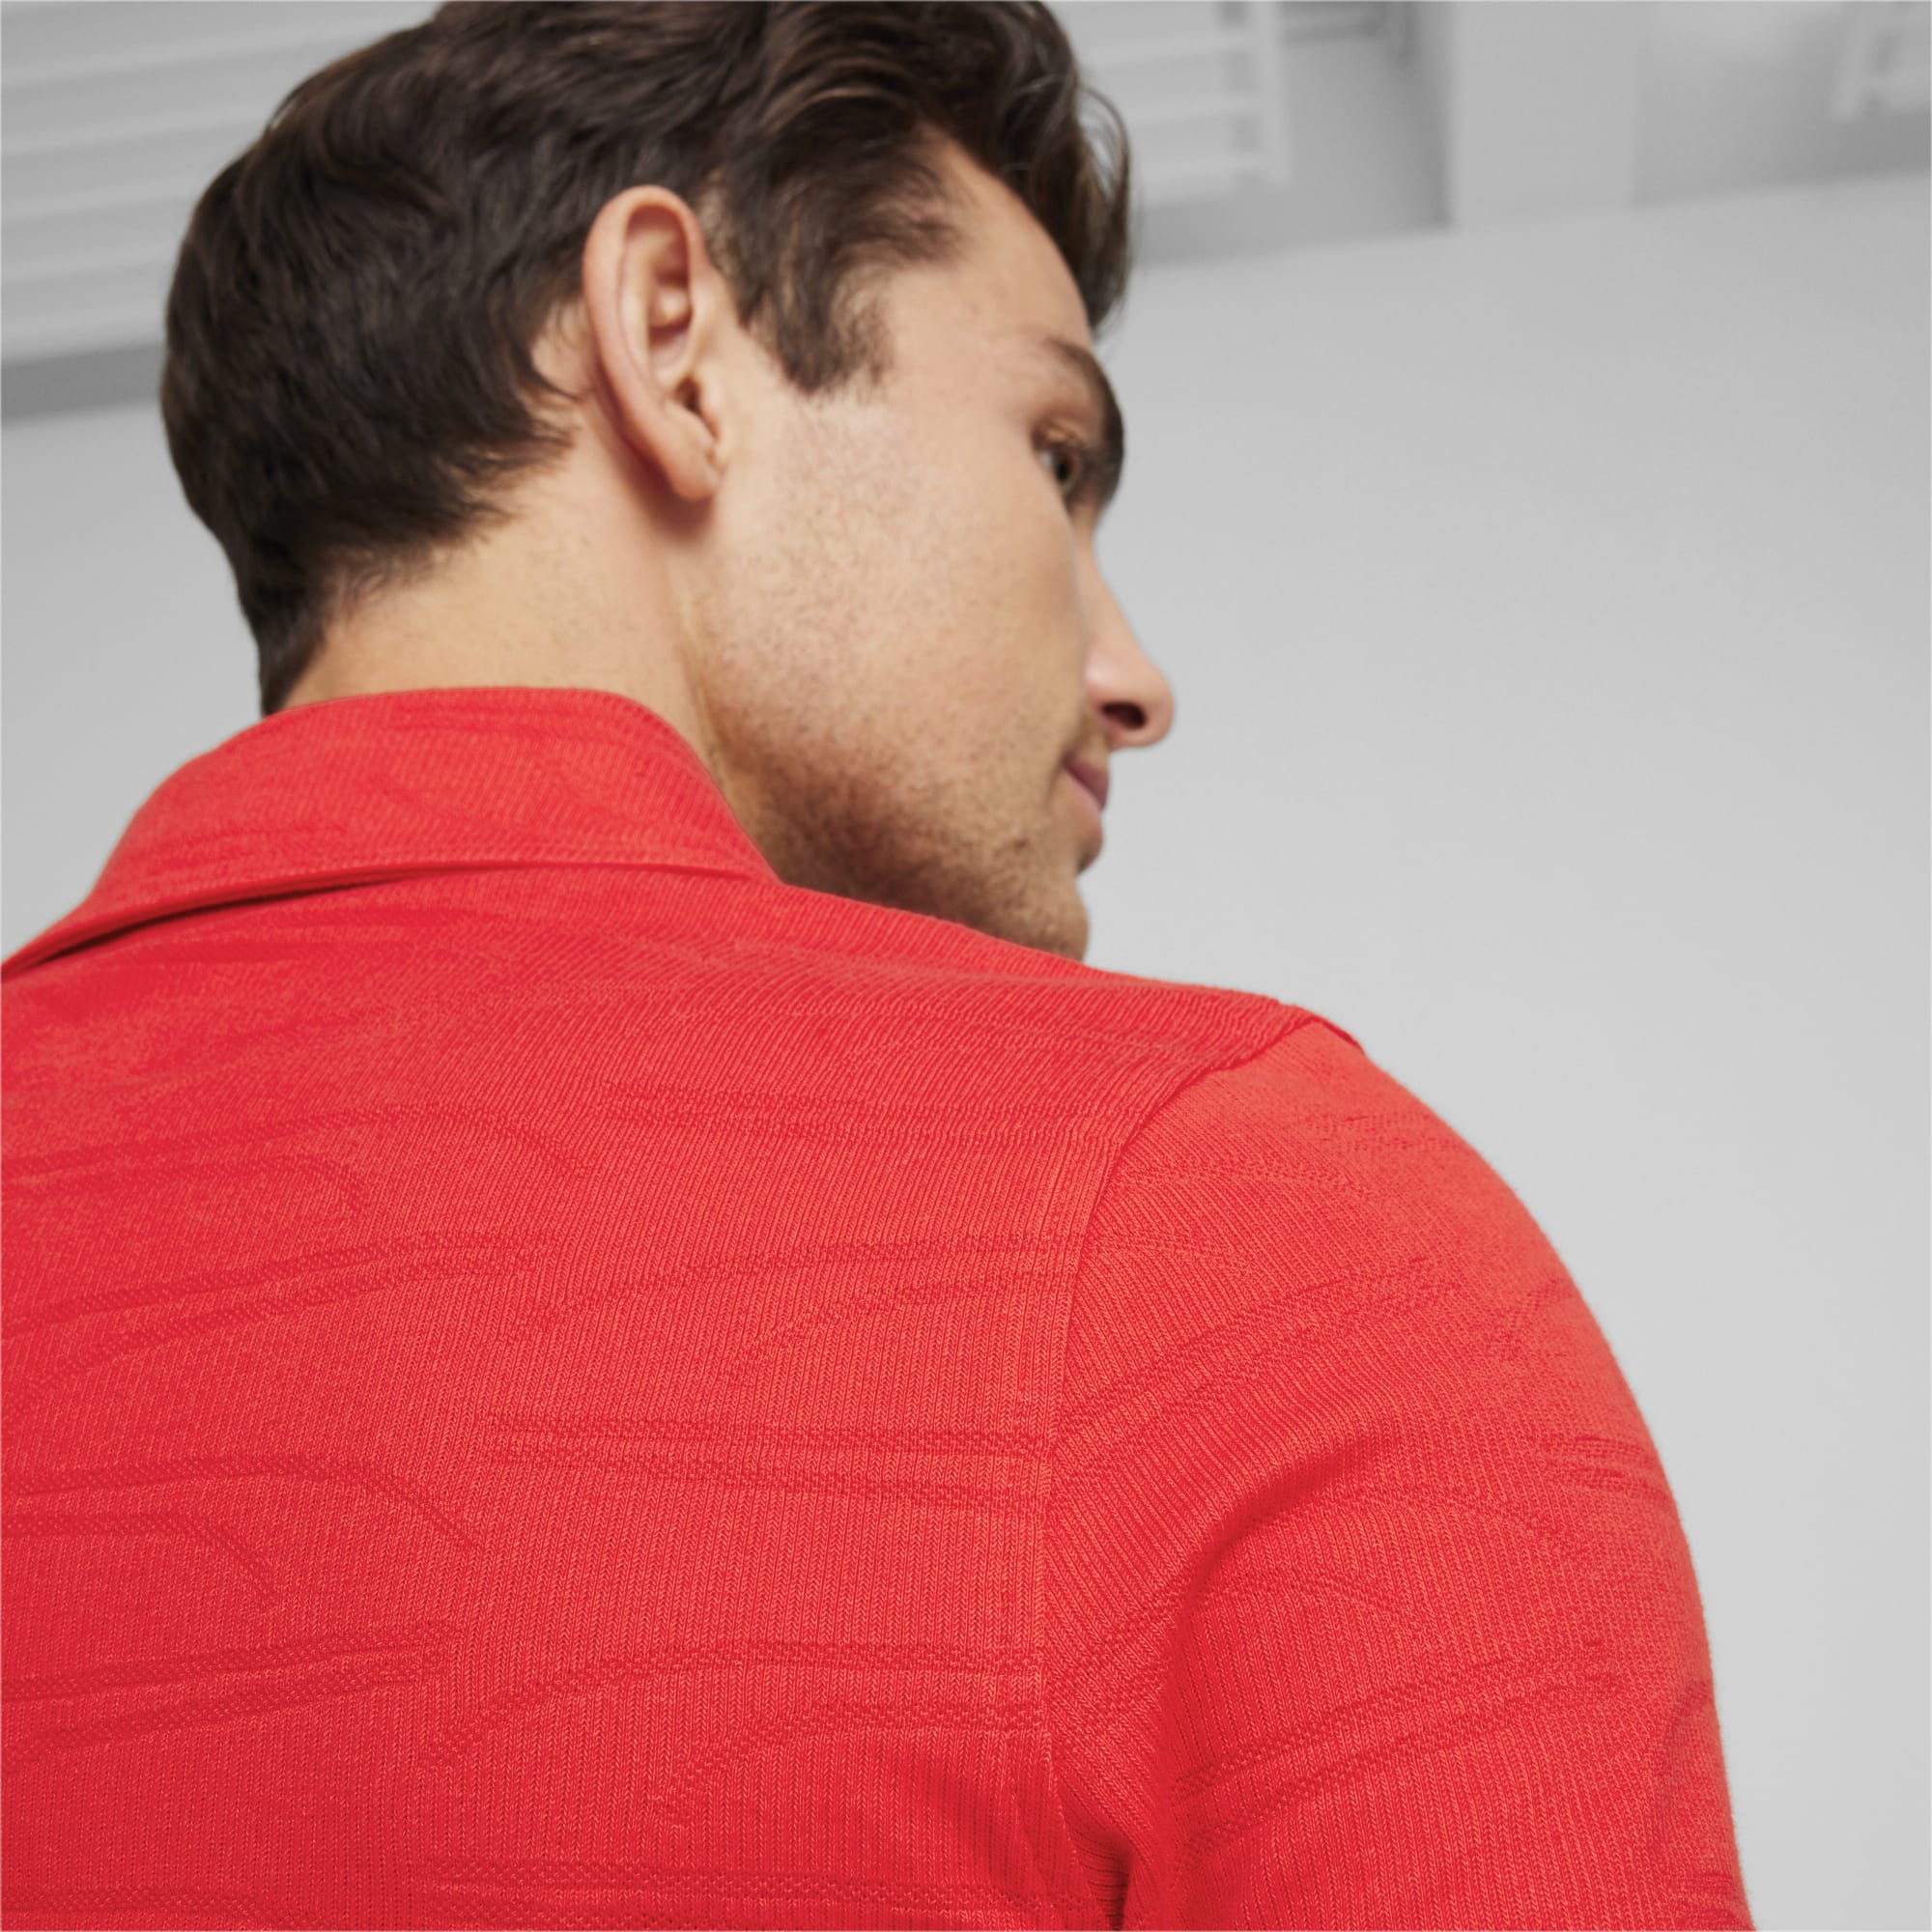 PUMA Scuderia Ferrari Style Men's Motorsport Jacquard Polo Shirt, Red, Size XS, Clothing